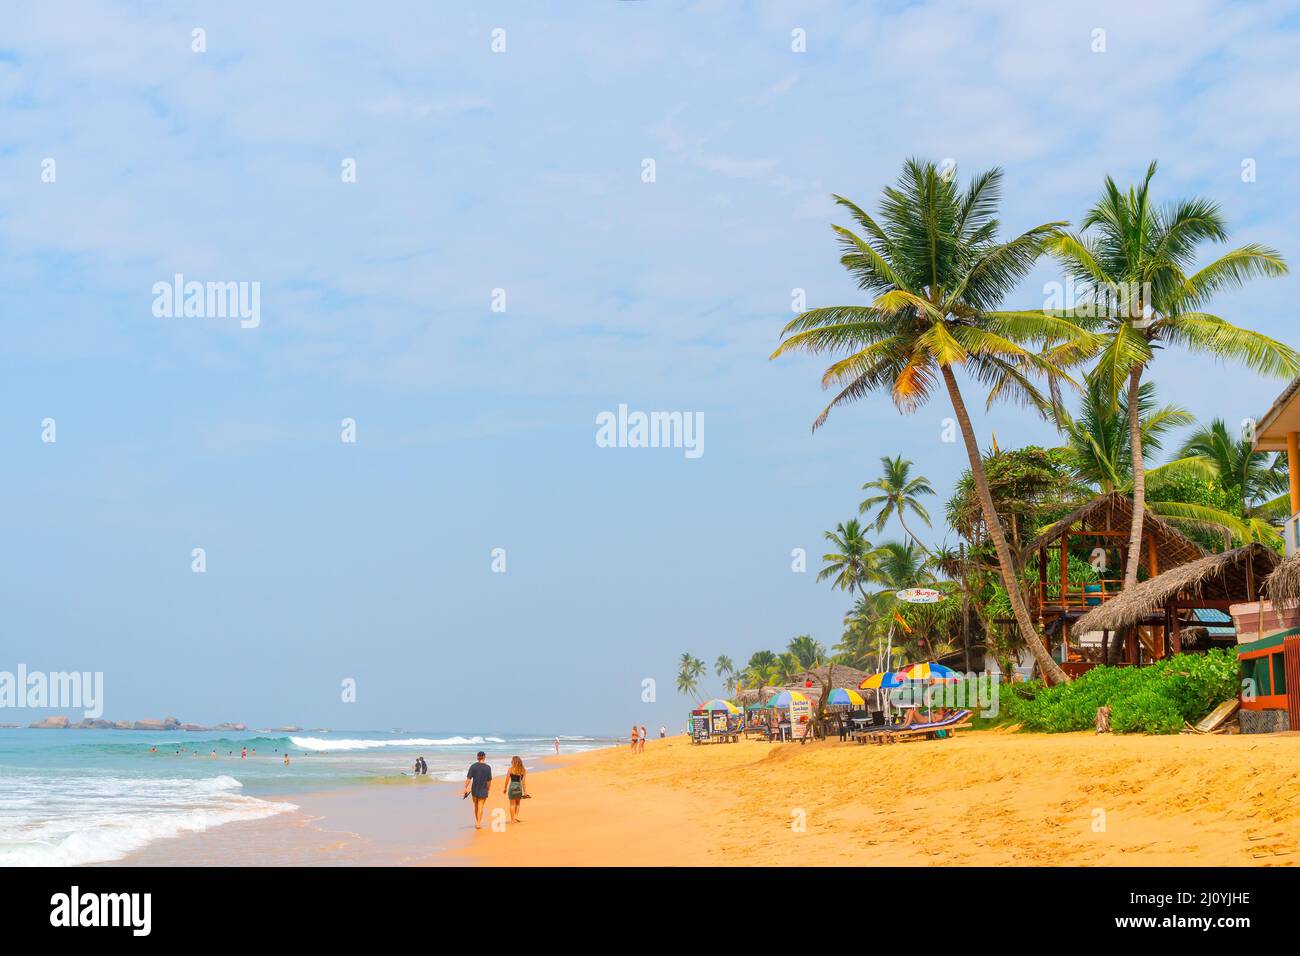 Hikkaduwa, Sri Lanka. March 8, 2018. Beach on the Indian Ocean. Sunny day, yellow sand, palm trees and foam waves. Stock Photo